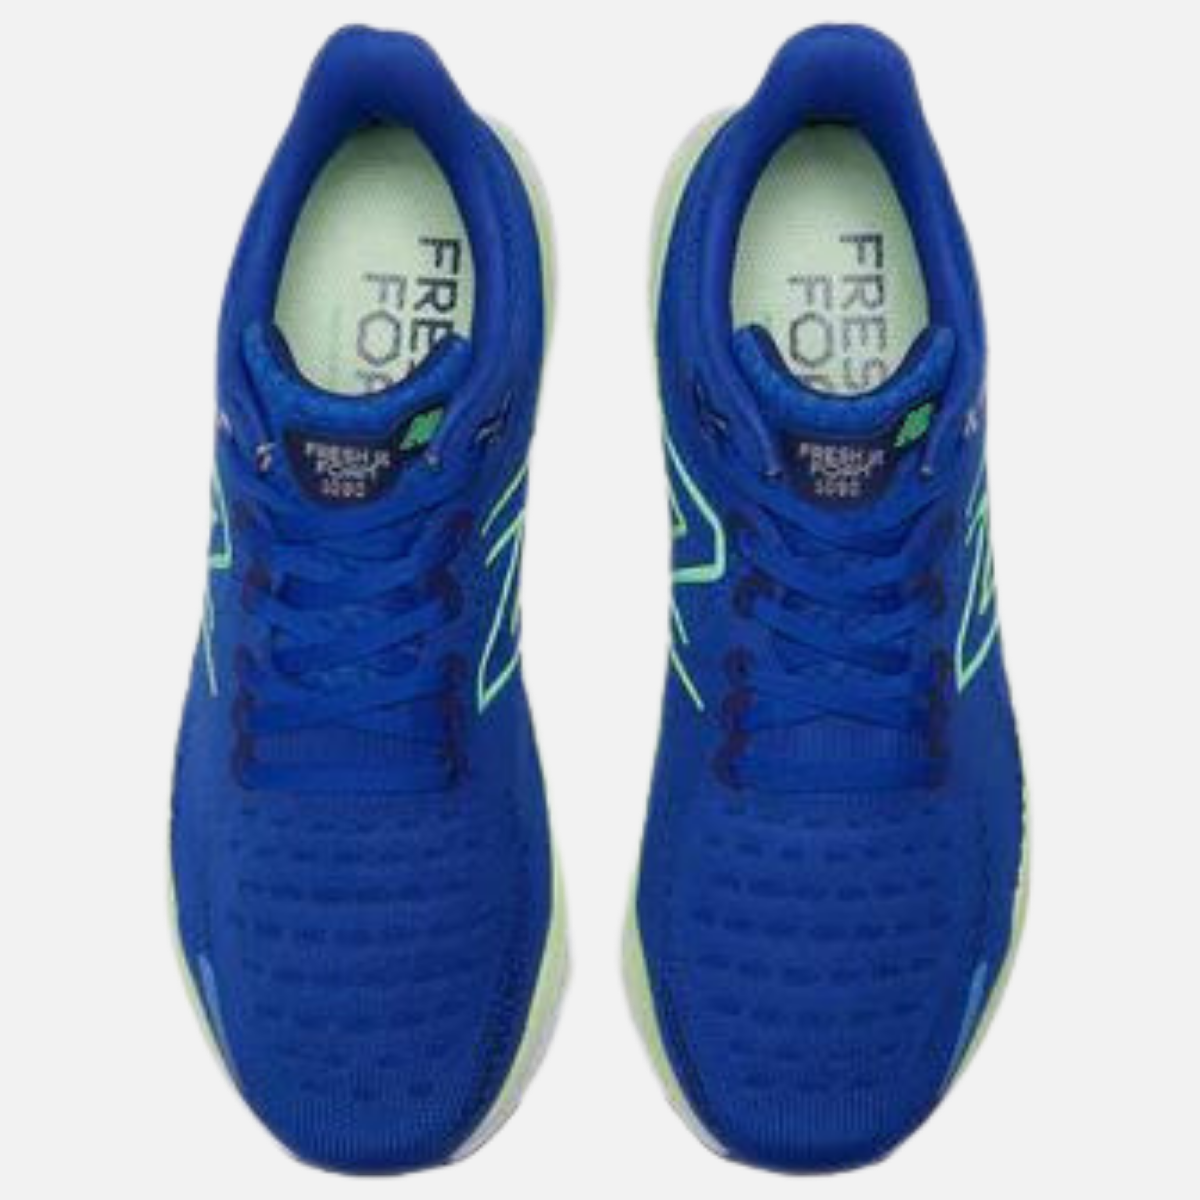 New Balance Fresh Foam Running Shoes -Blue